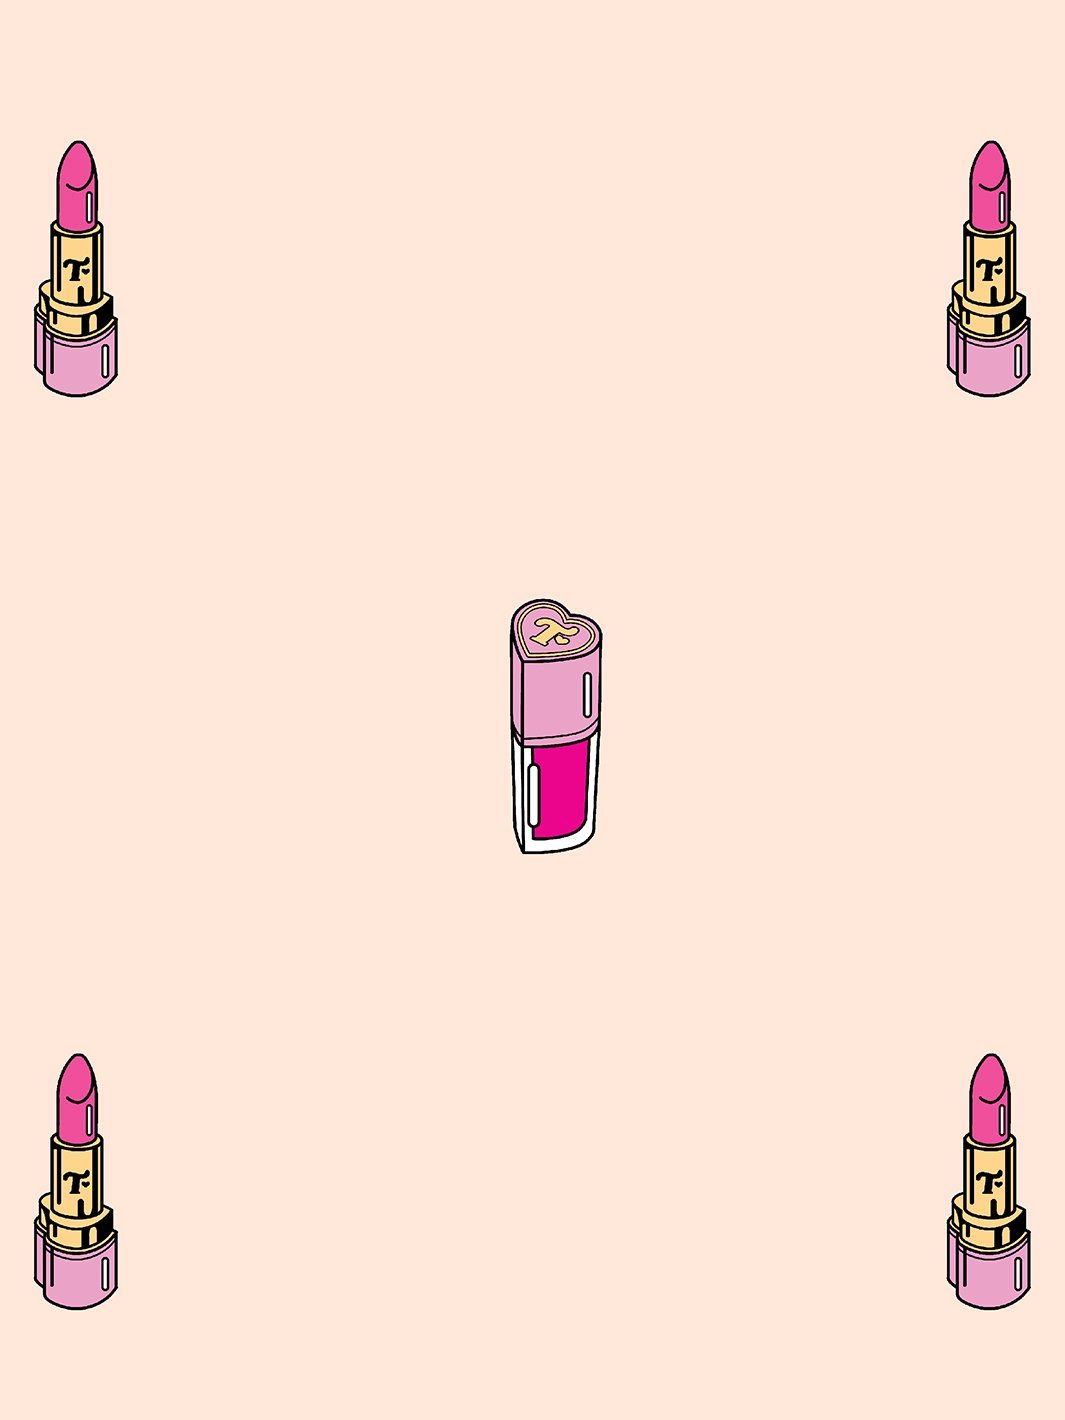 'Trixie Cosmetics' Wallpaper by Trixie Mattel - Peach